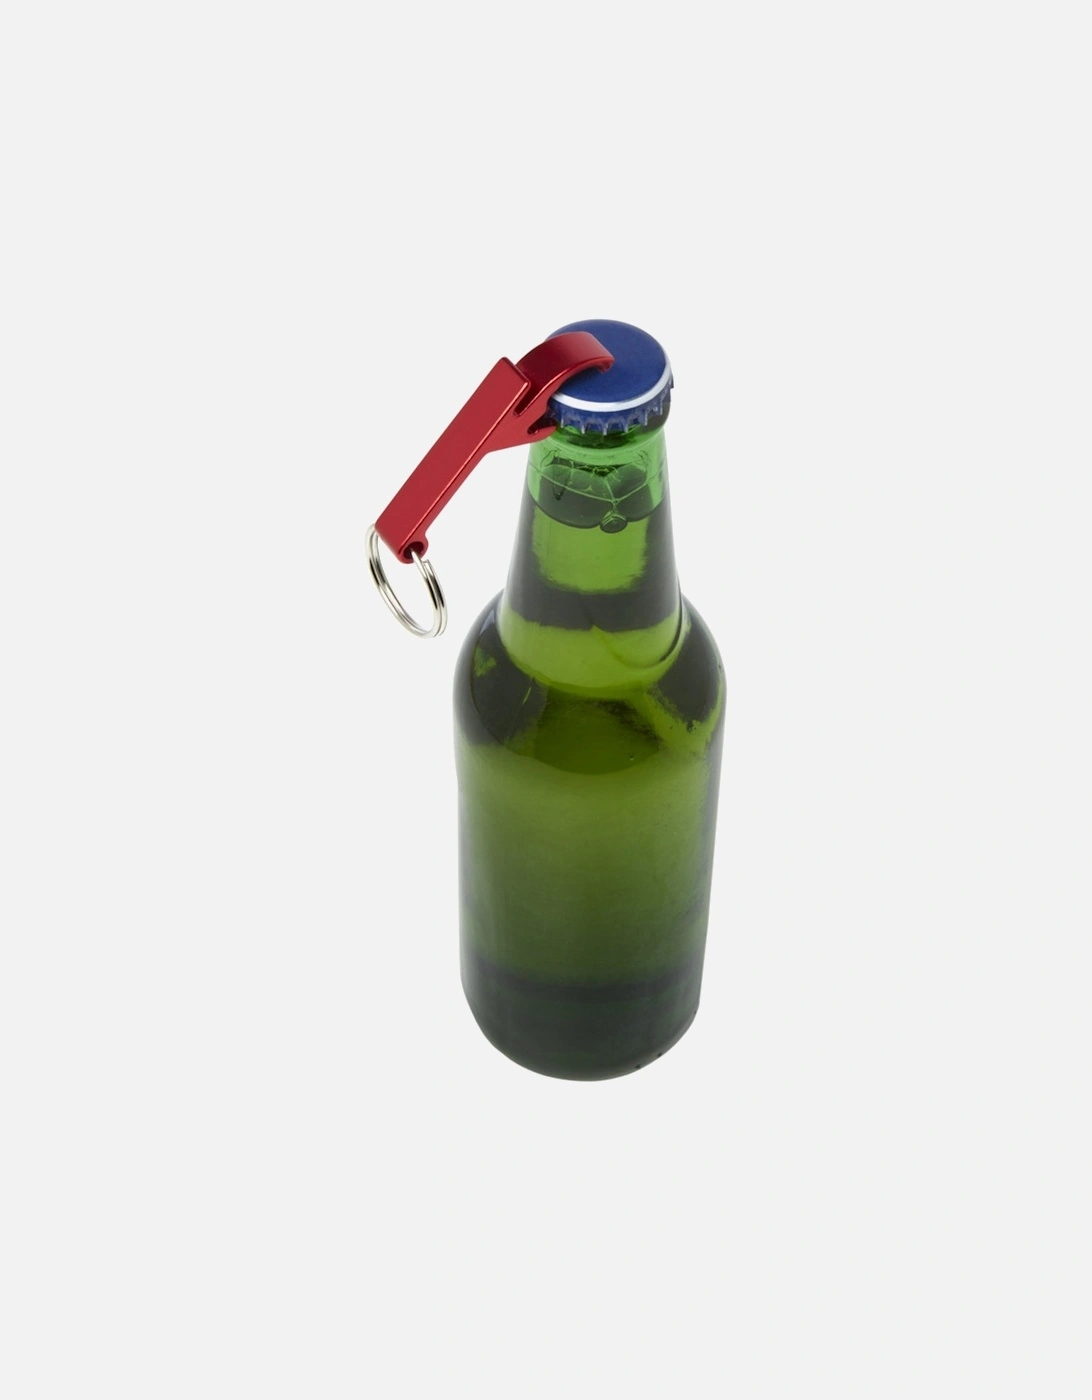 Tao Recycled Aluminium Bottle Opener Keyring